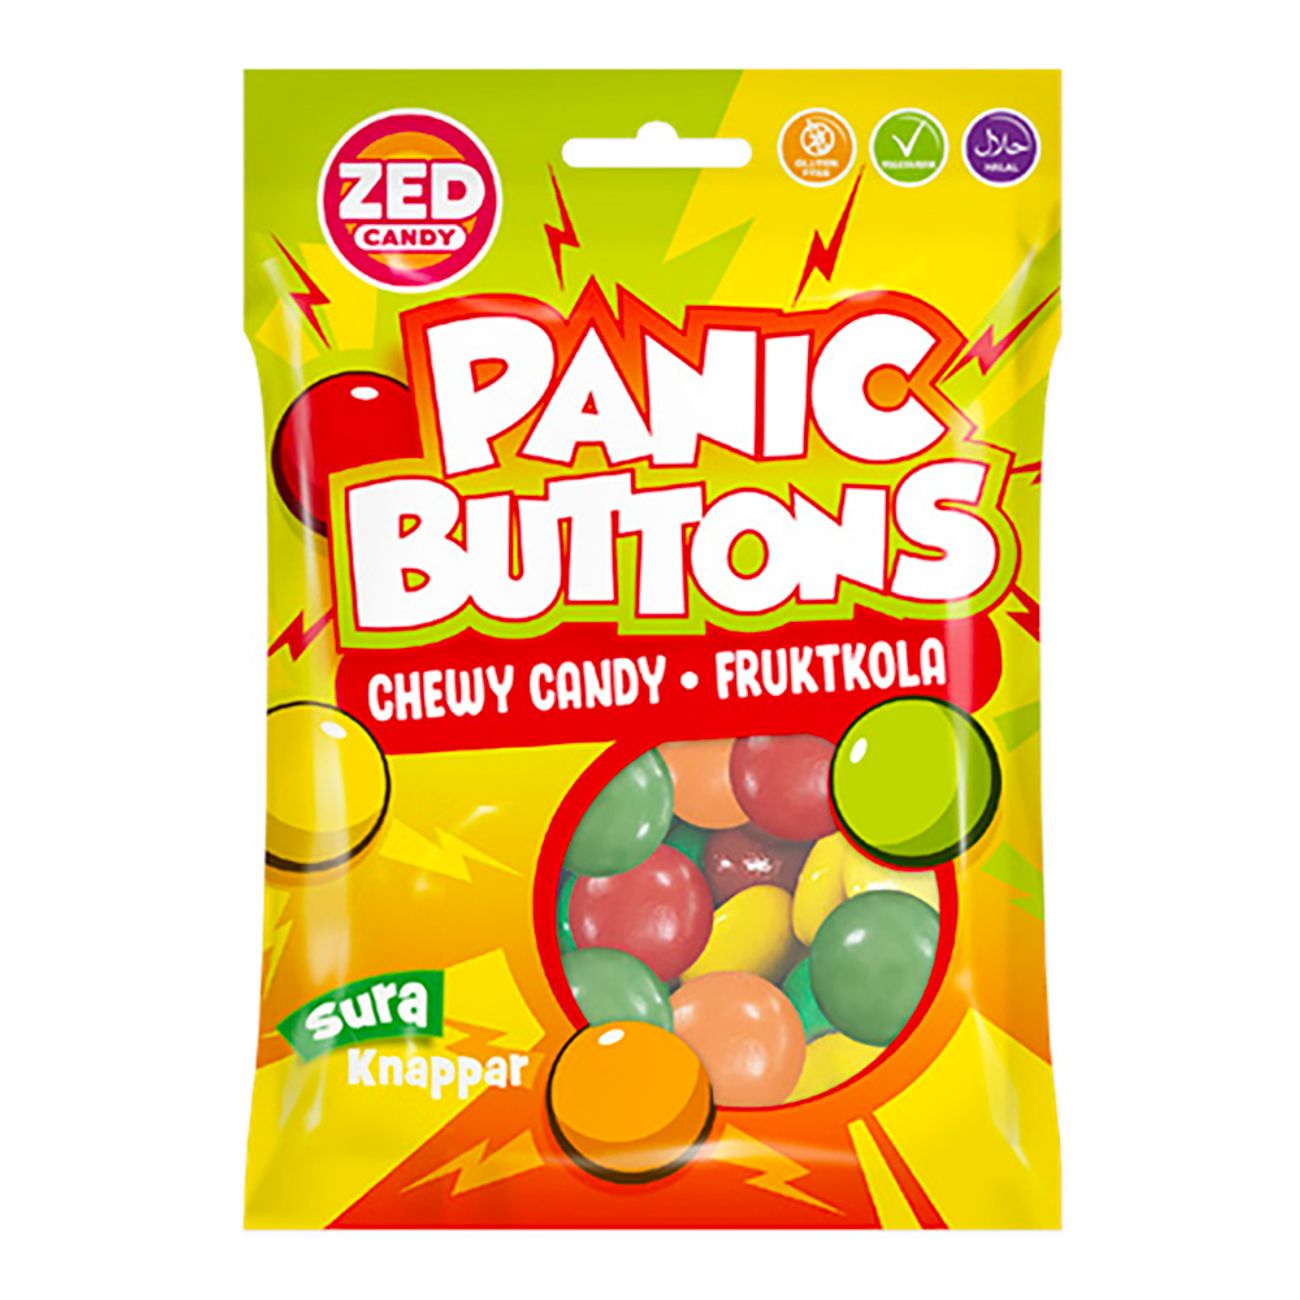 panic-buttons-fruktkola-82541-1